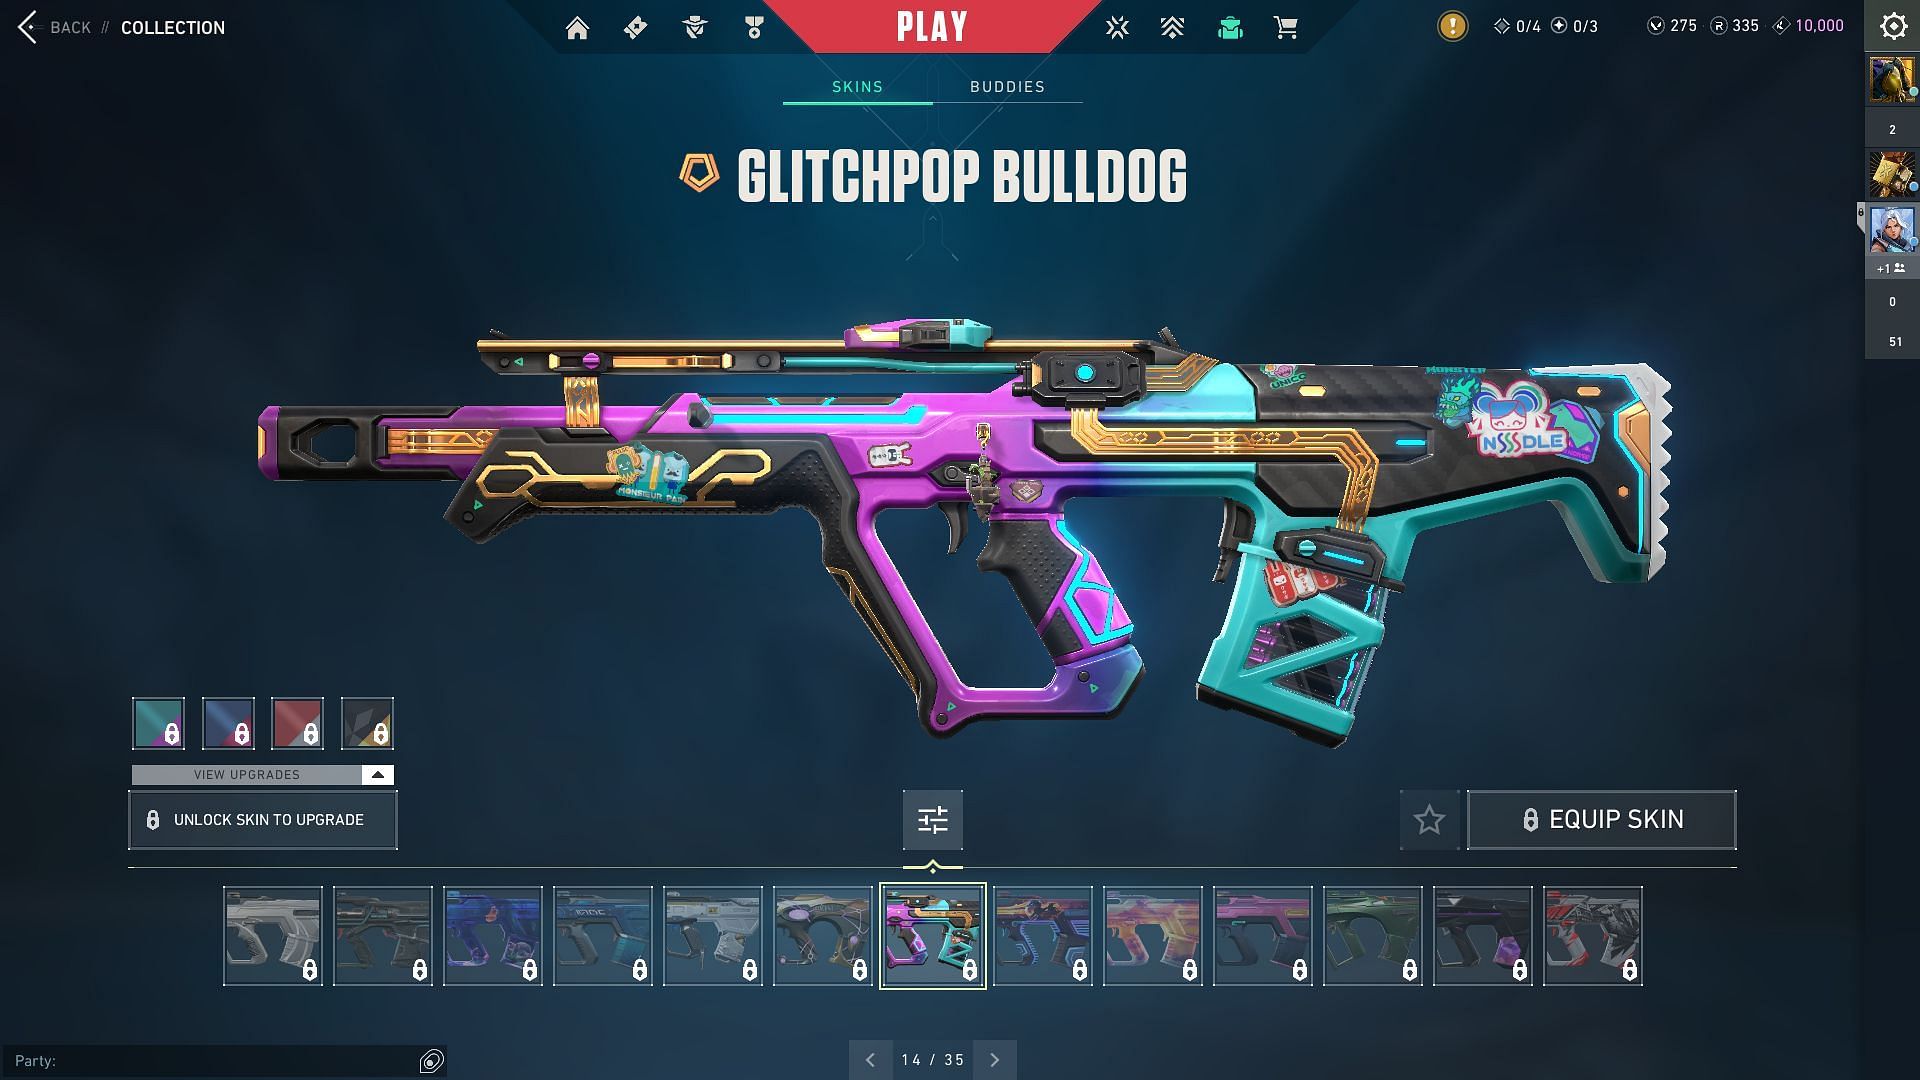 Glitchpop Bulldog (Image via Sportskeeda and Riot Games)